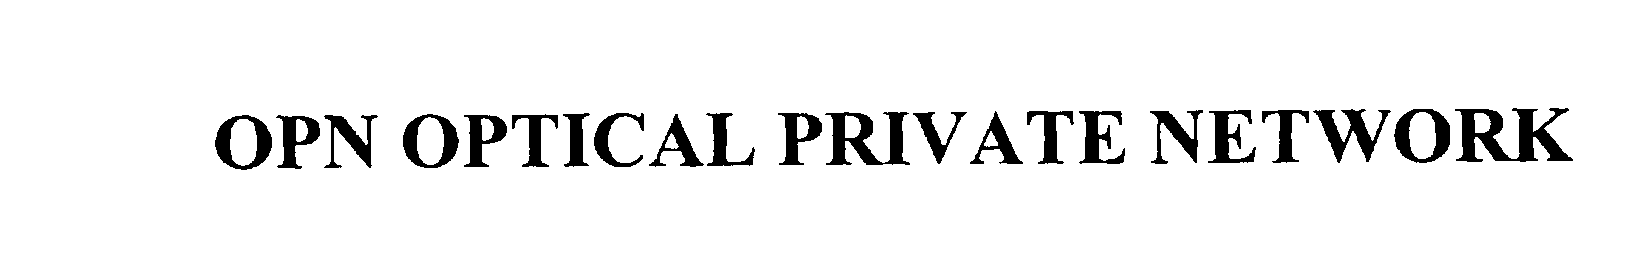 Trademark Logo OPN OPTICAL PRIVATE NETWORK